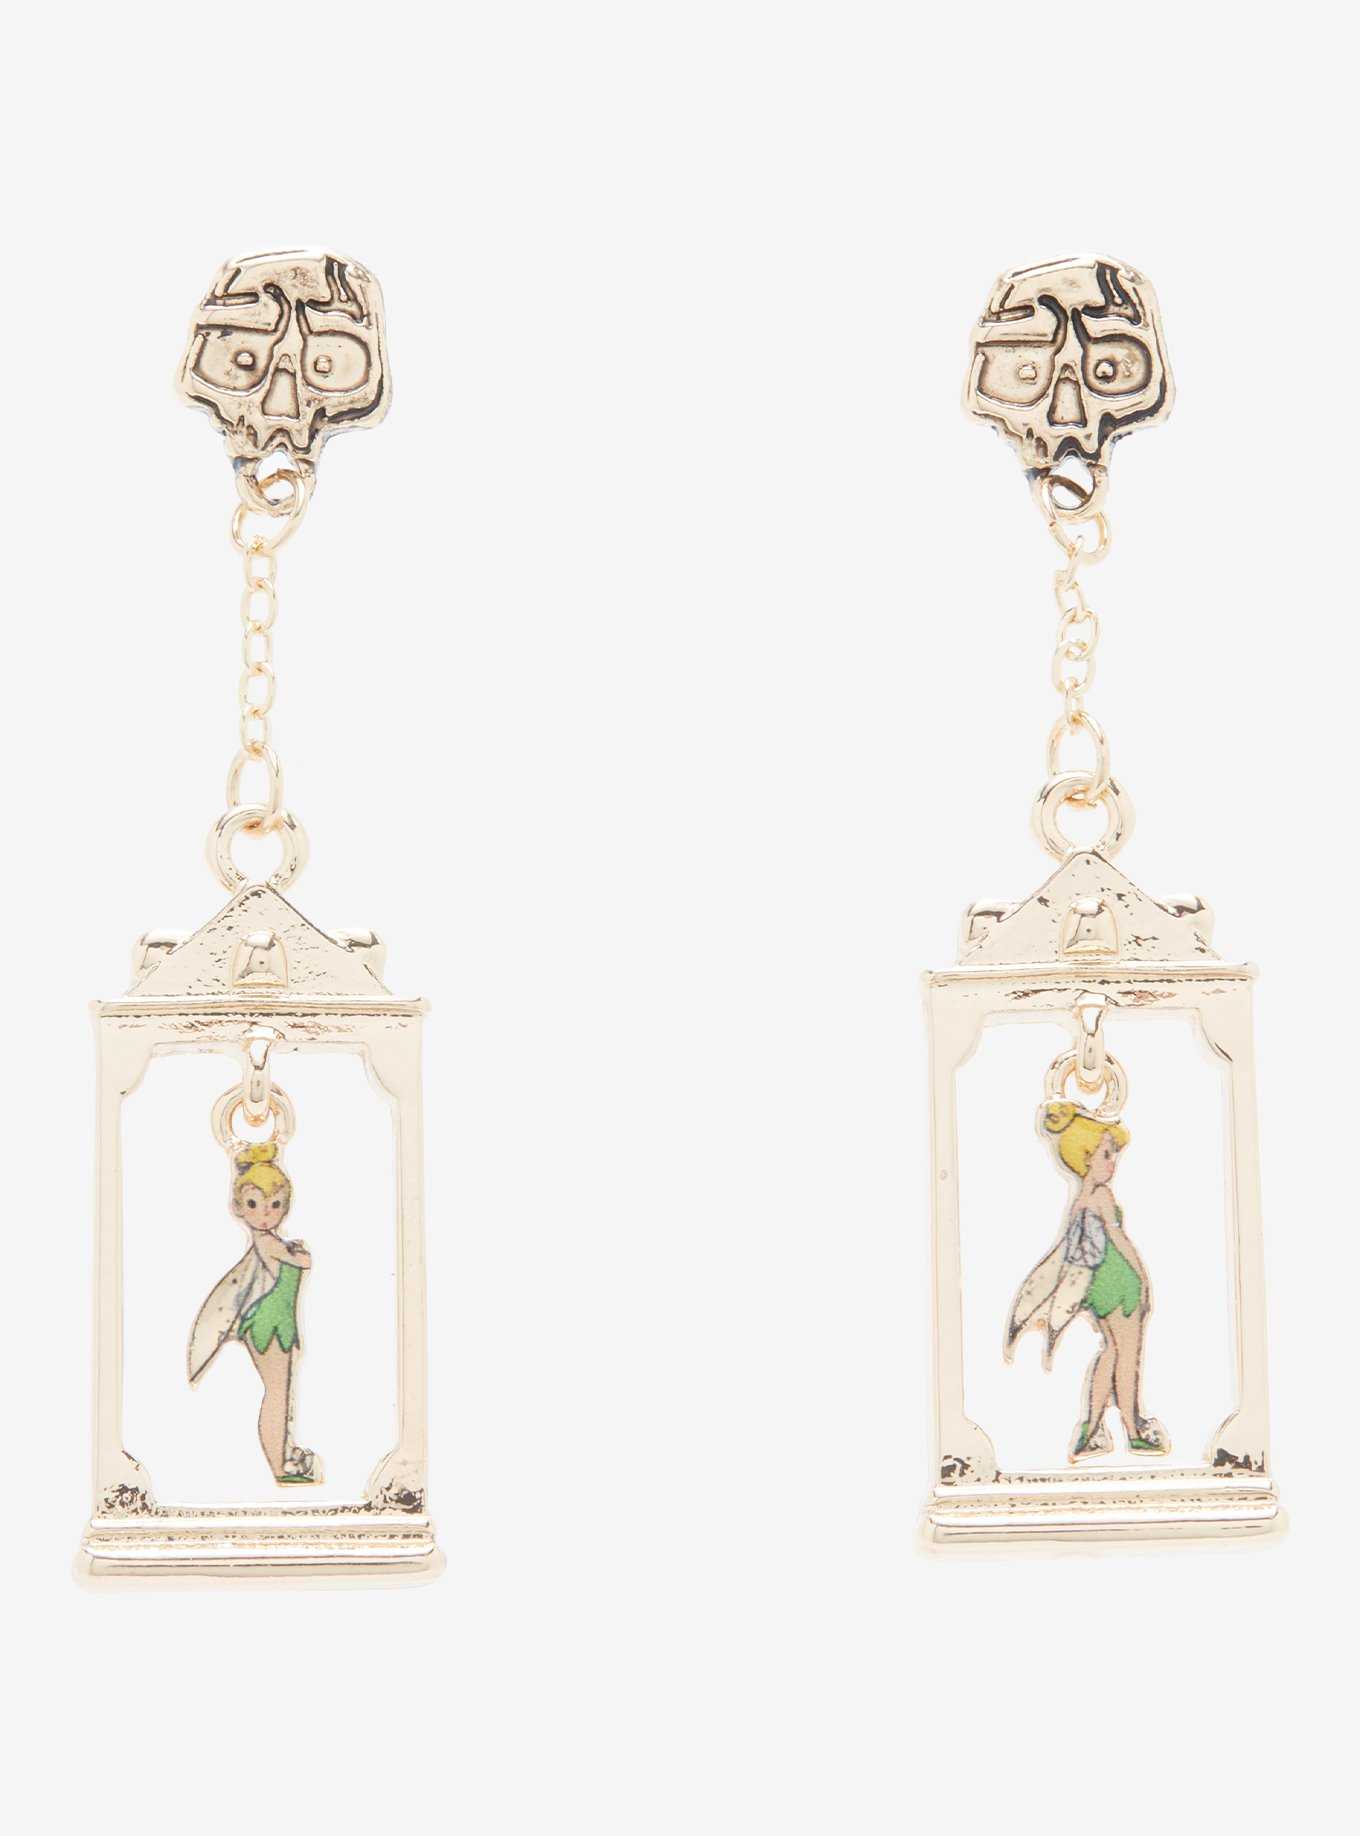 Disney 100 Peter Pan Tinker Bell Lantern Earrings - BoxLunch Exclusive, , hi-res